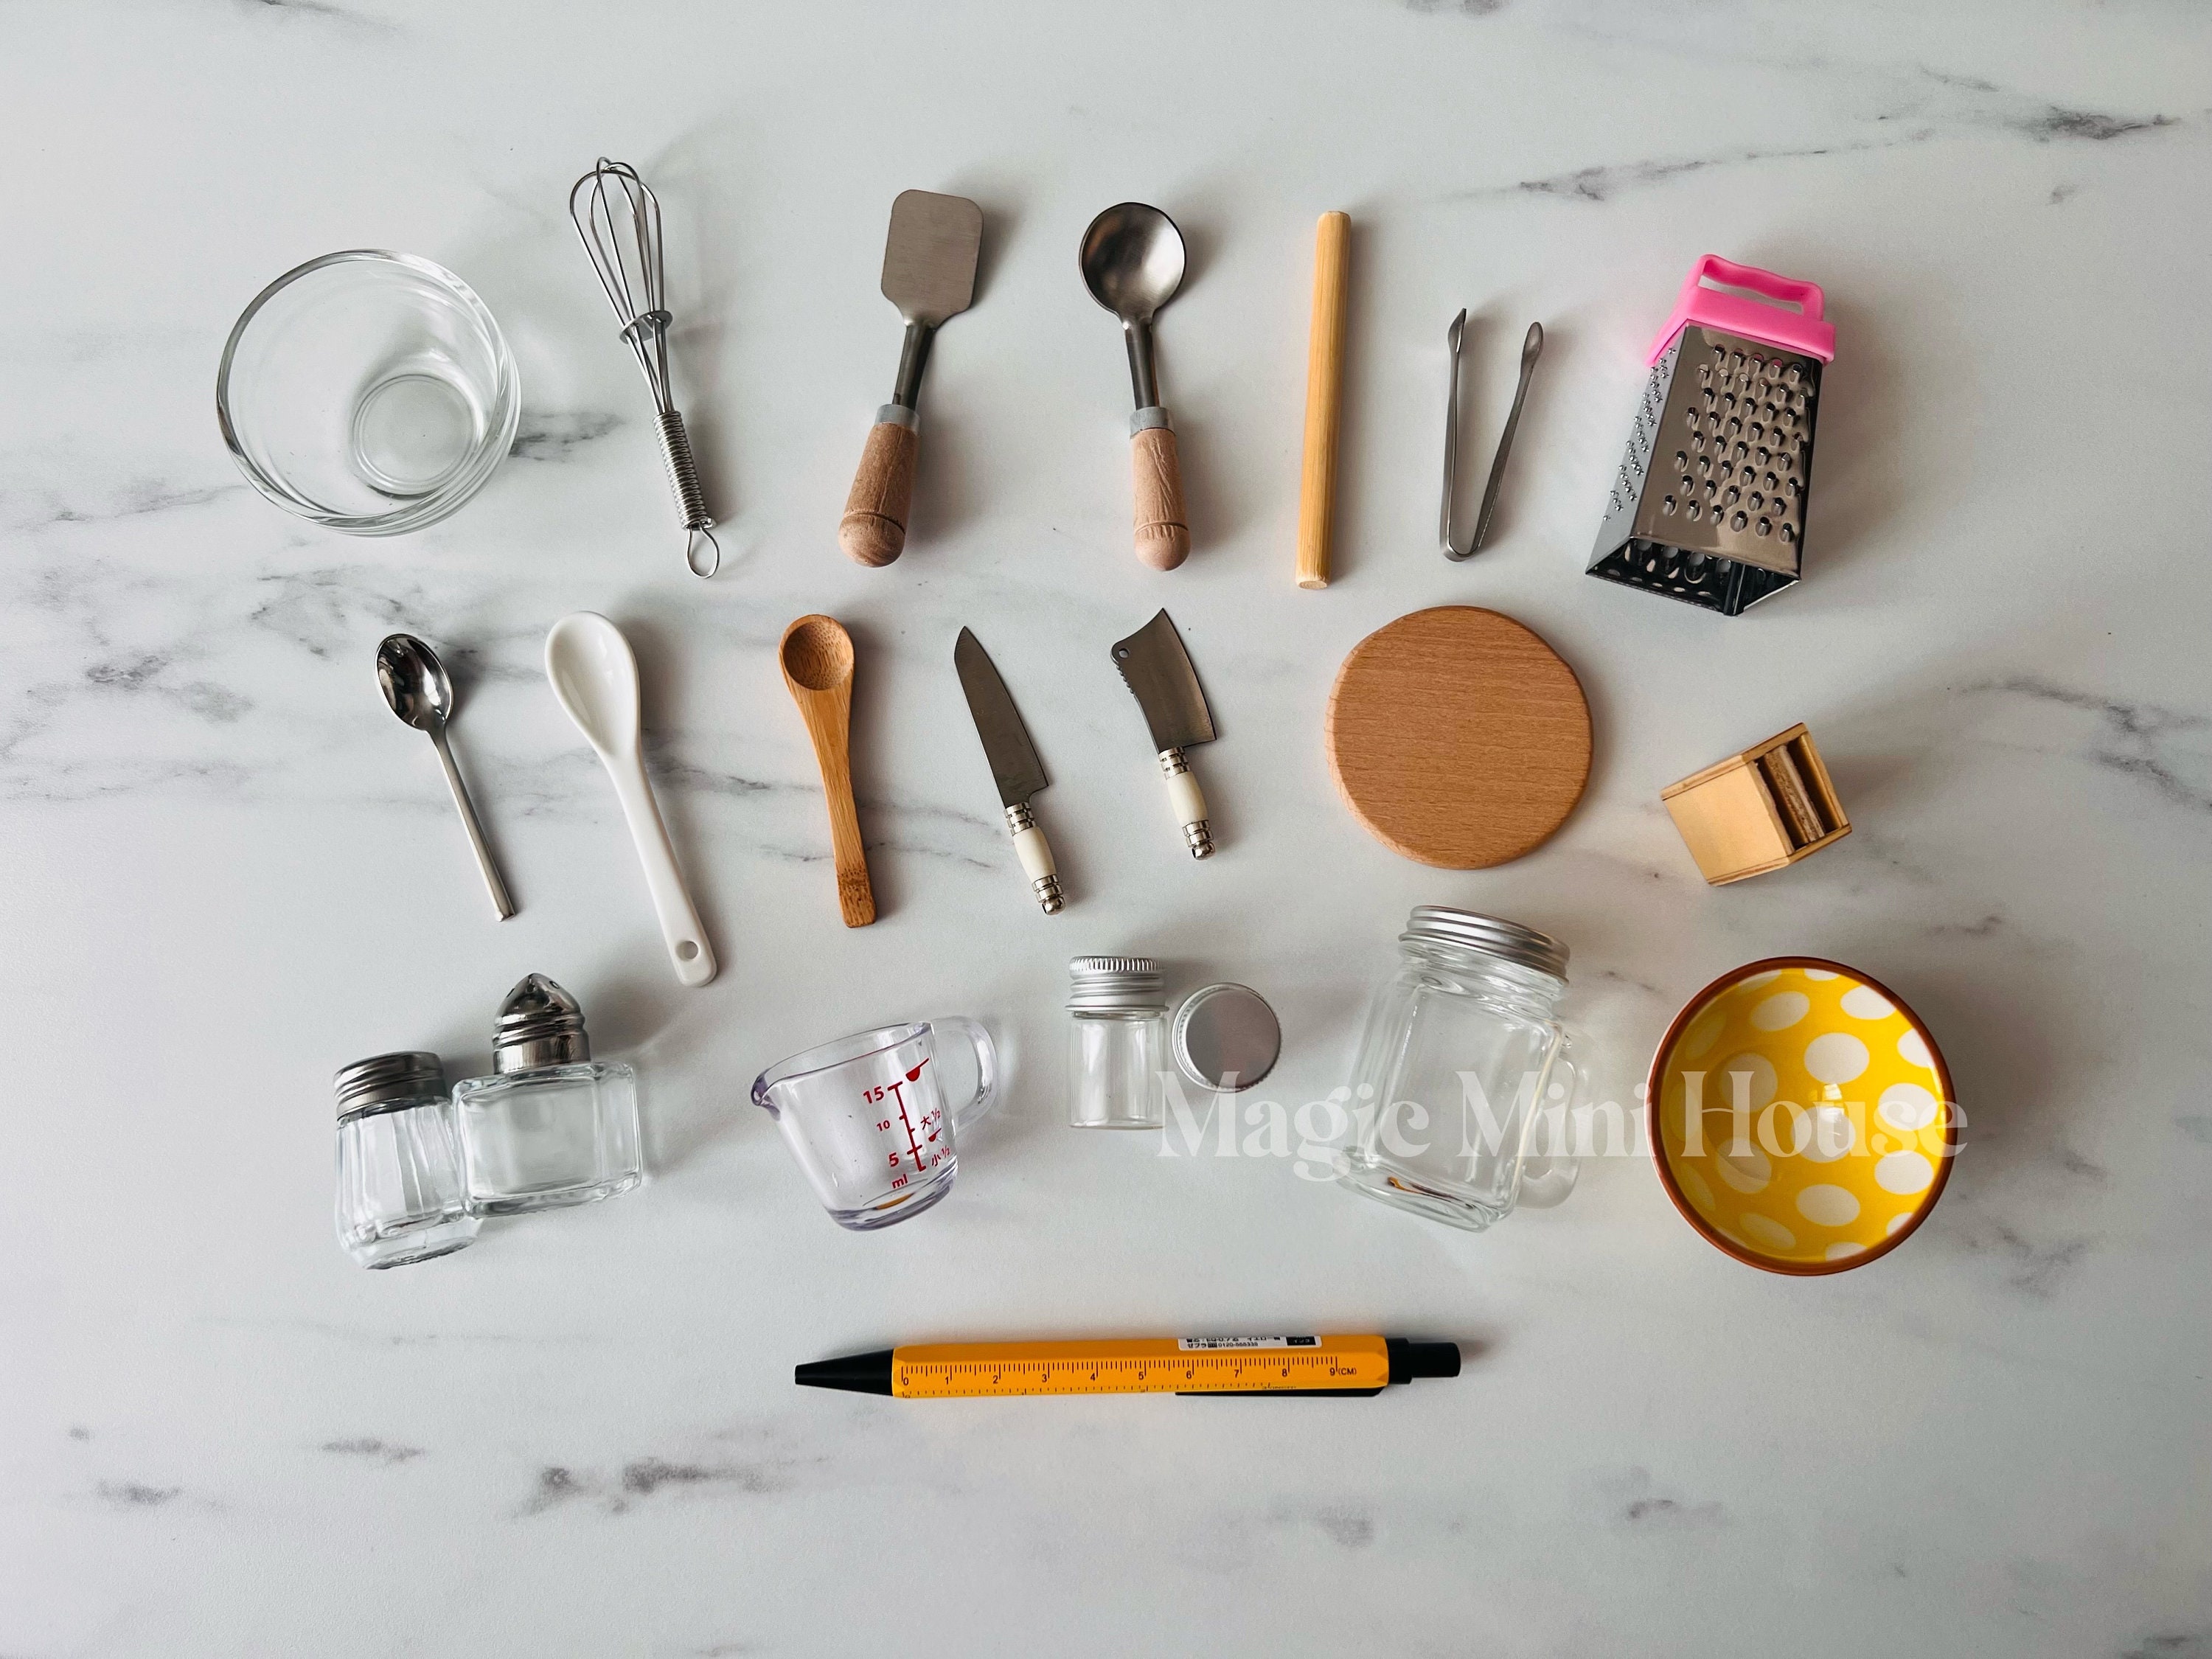 Kitchen & Table by H-E-B Measuring Spoon Set